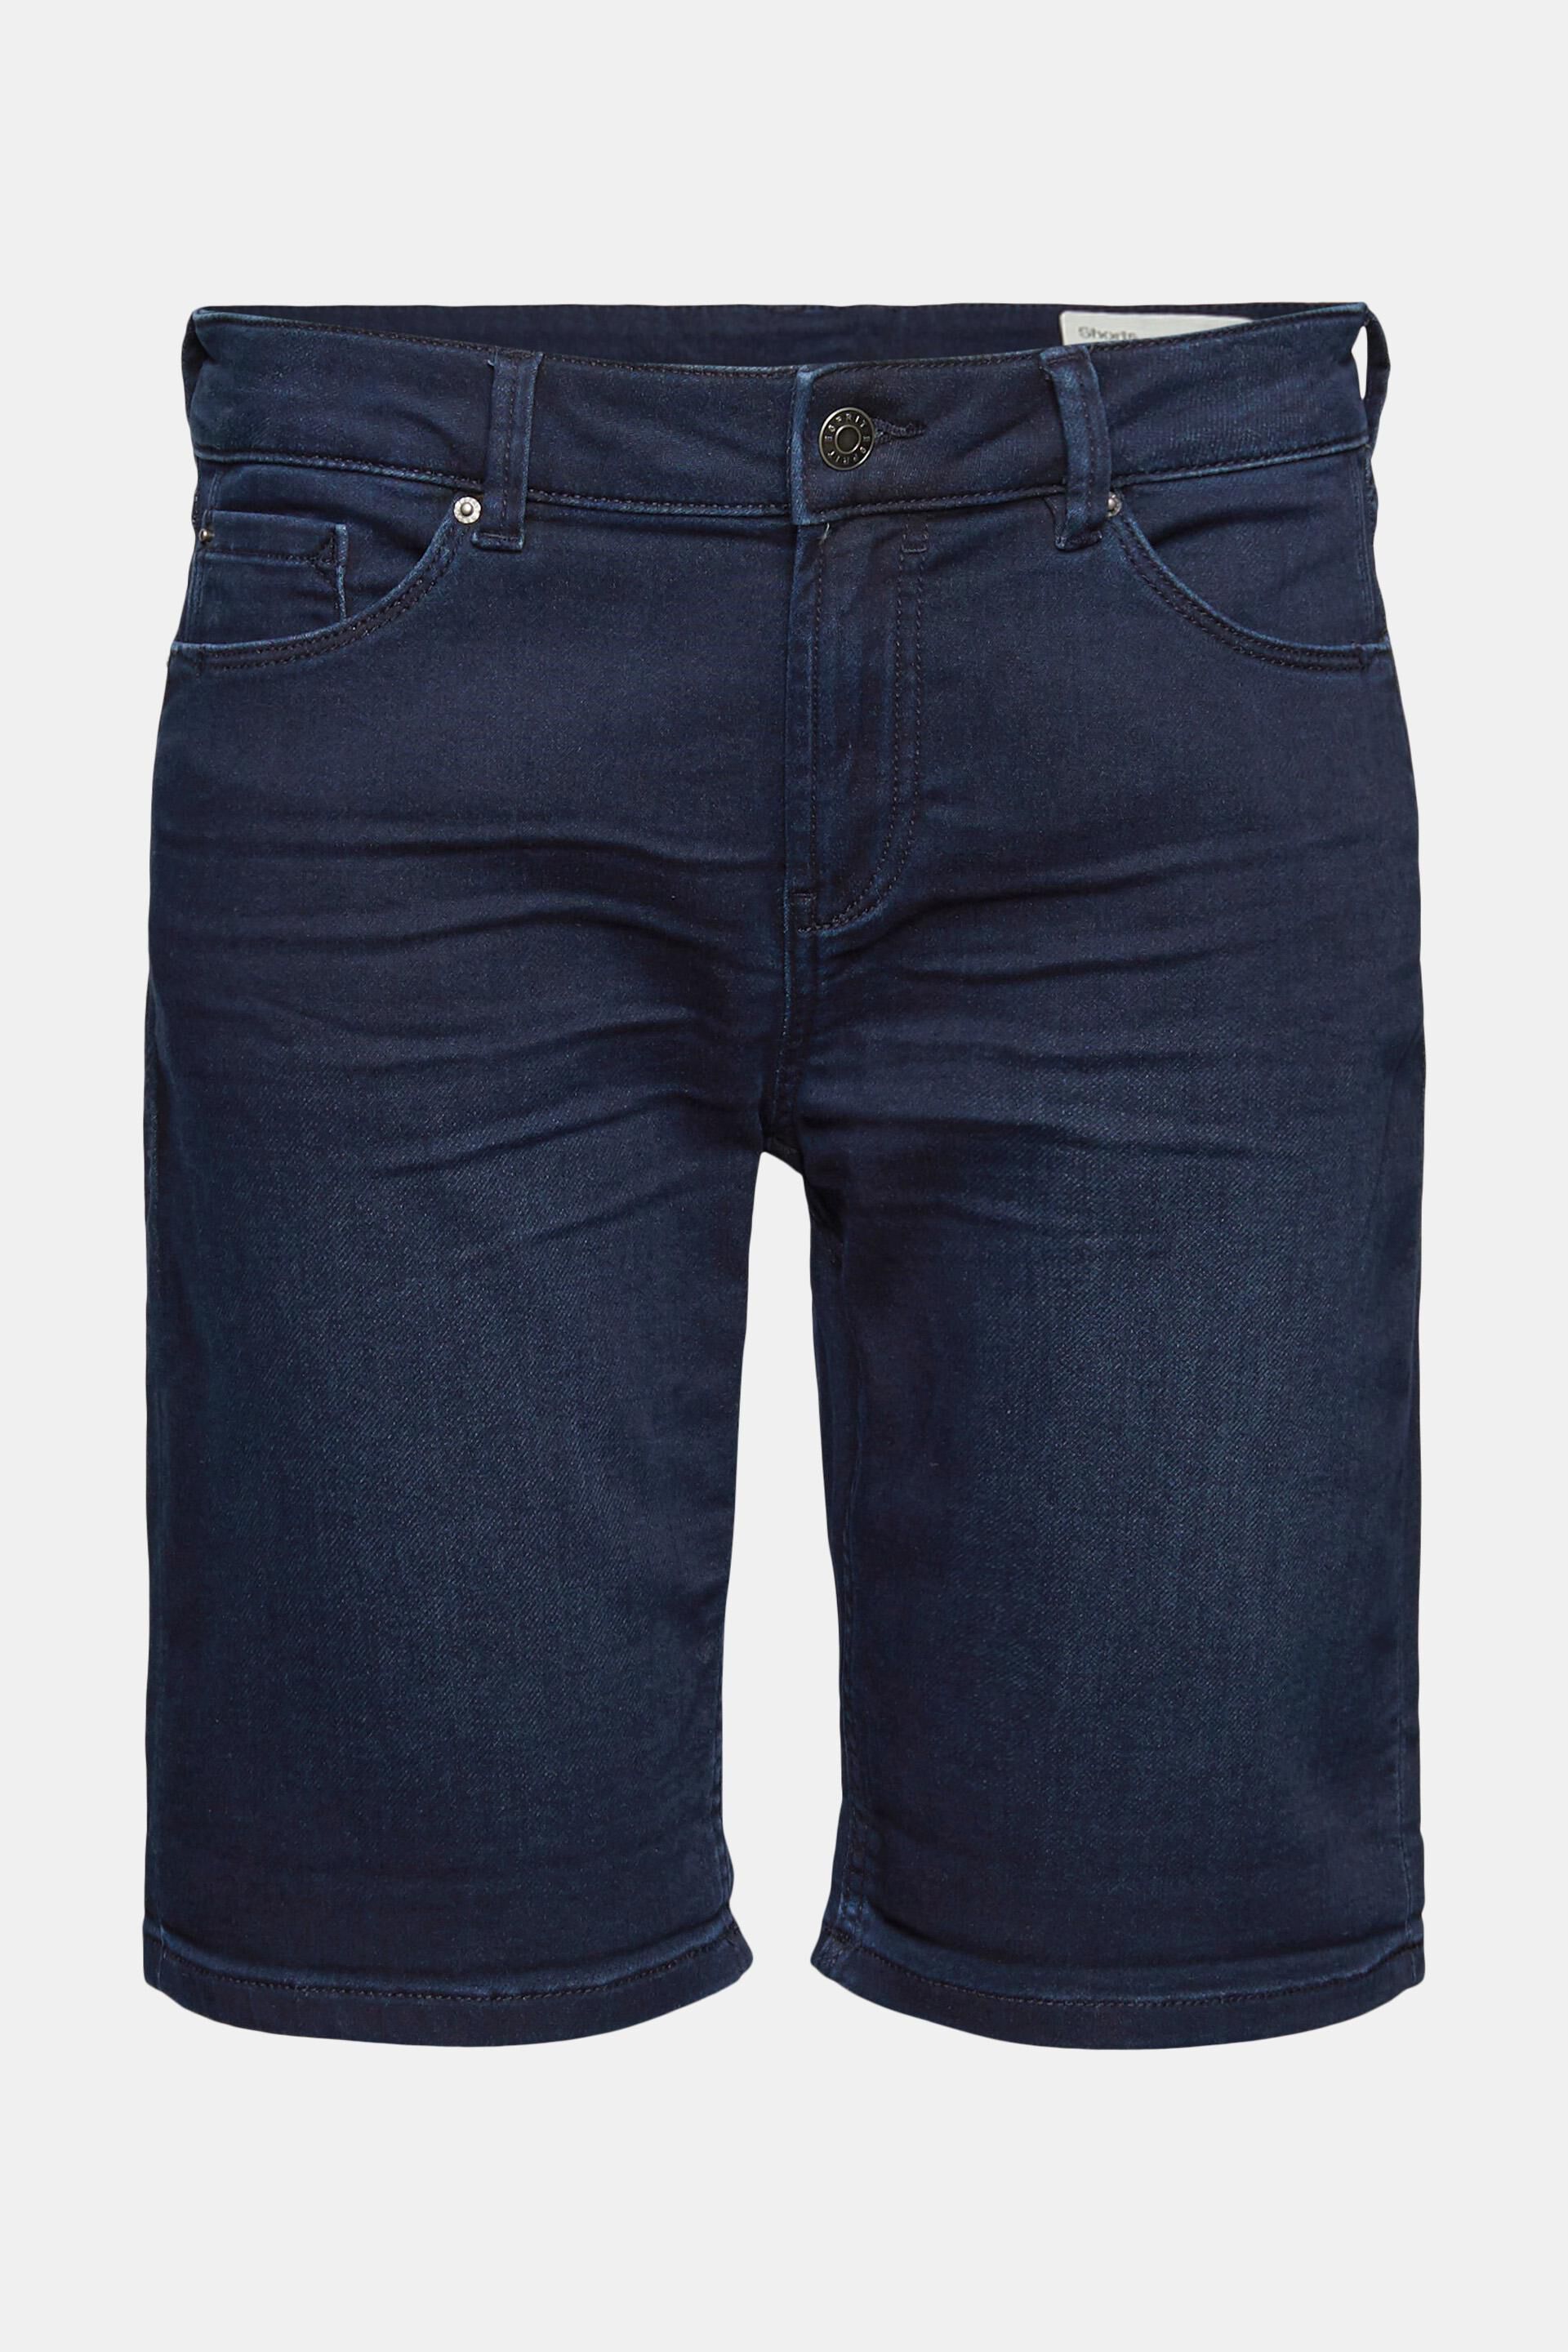 Seamfree Comfort NYR Hipster Shorts Pantaloncini di Esprit in Blu Donna Abbigliamento da Shorts da Shorts in denim e di jeans 